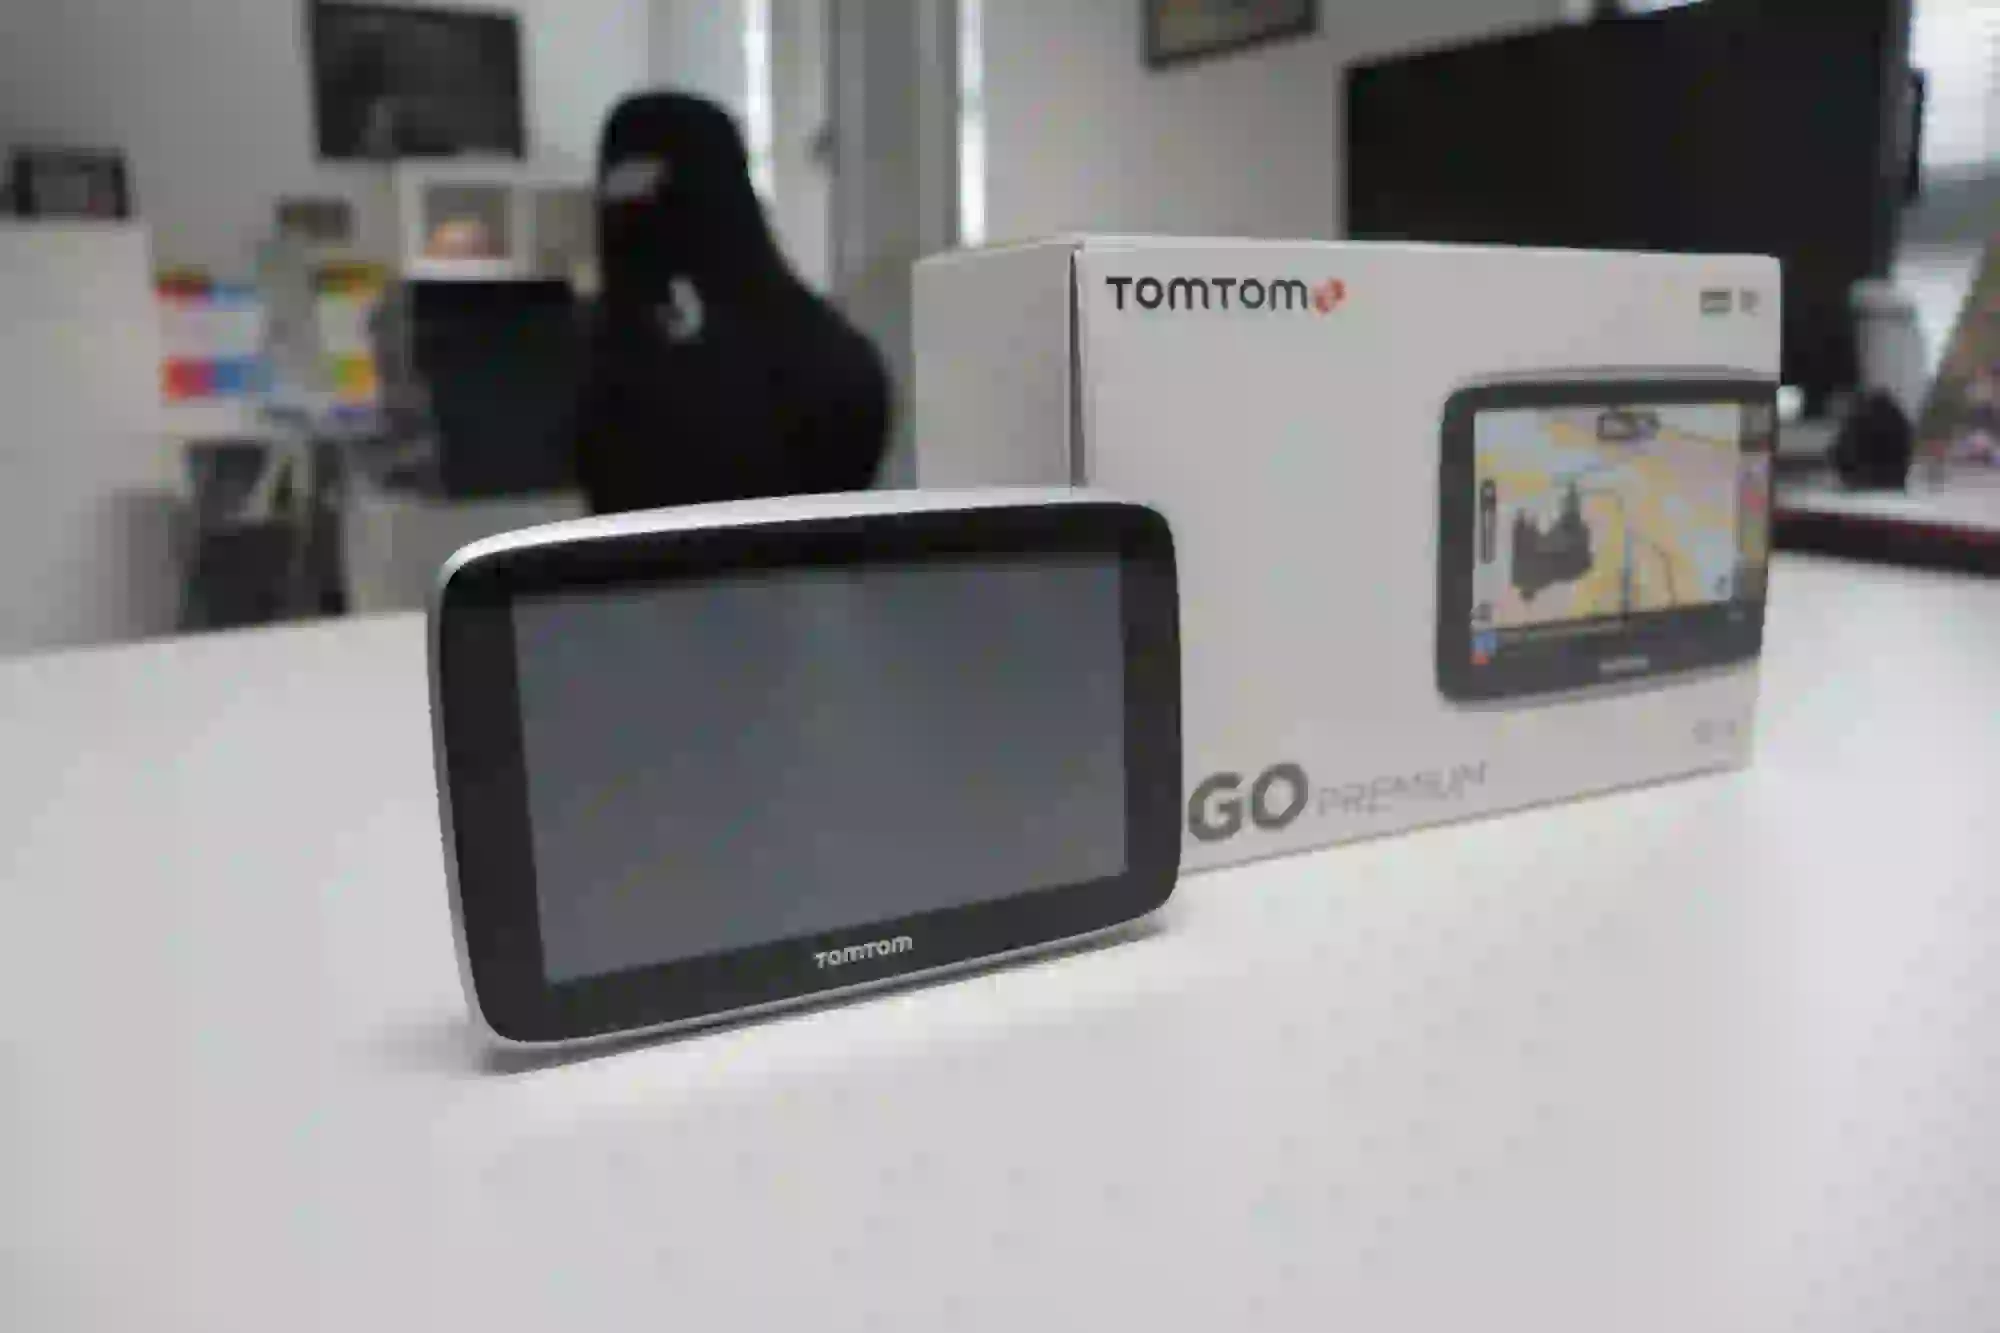 TomTom GO Premium - 5 Cose Da Sapere - 9